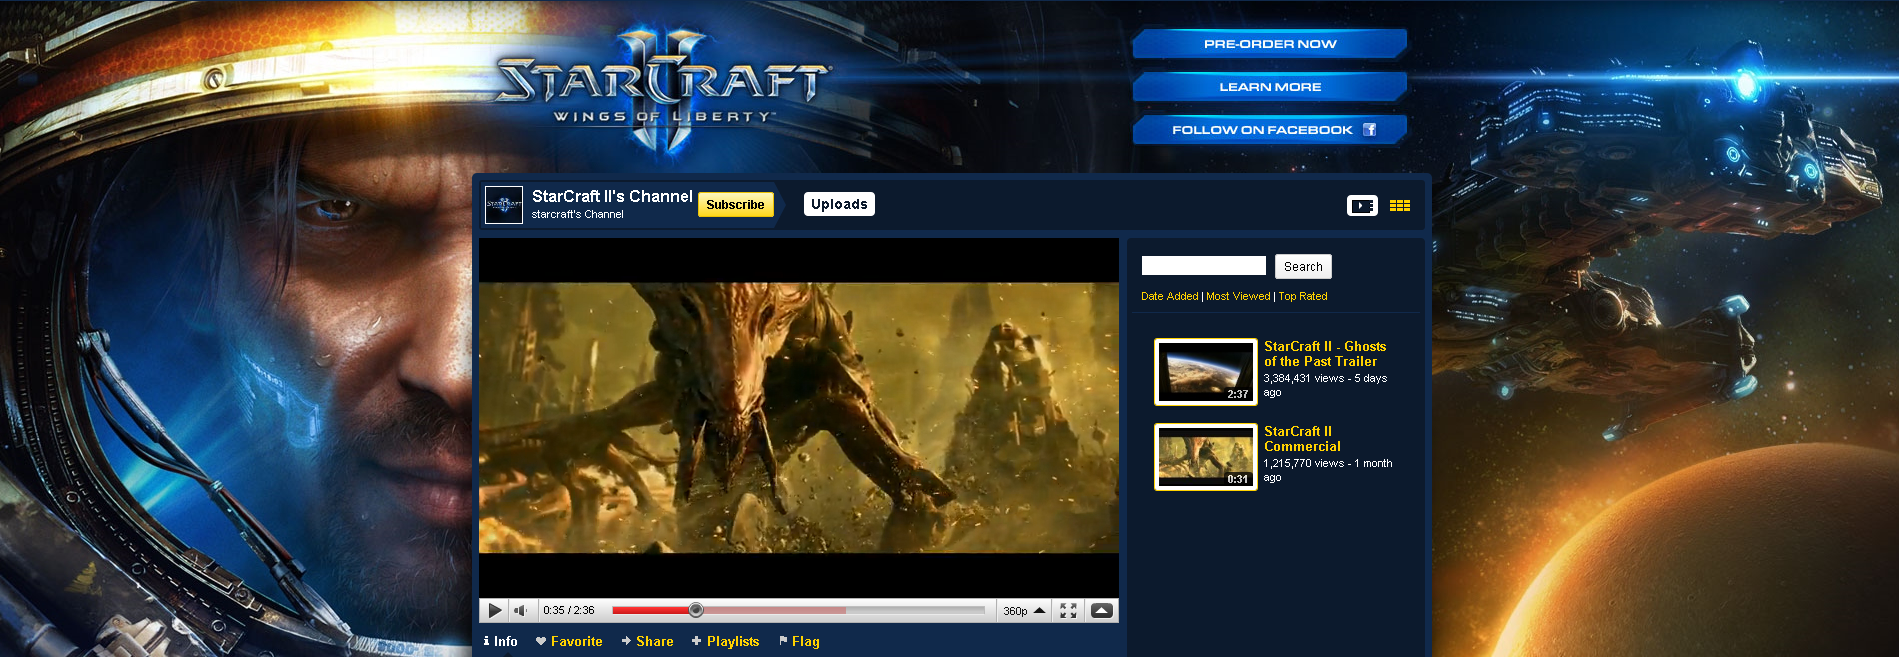 StarCraft II YouTube Channel